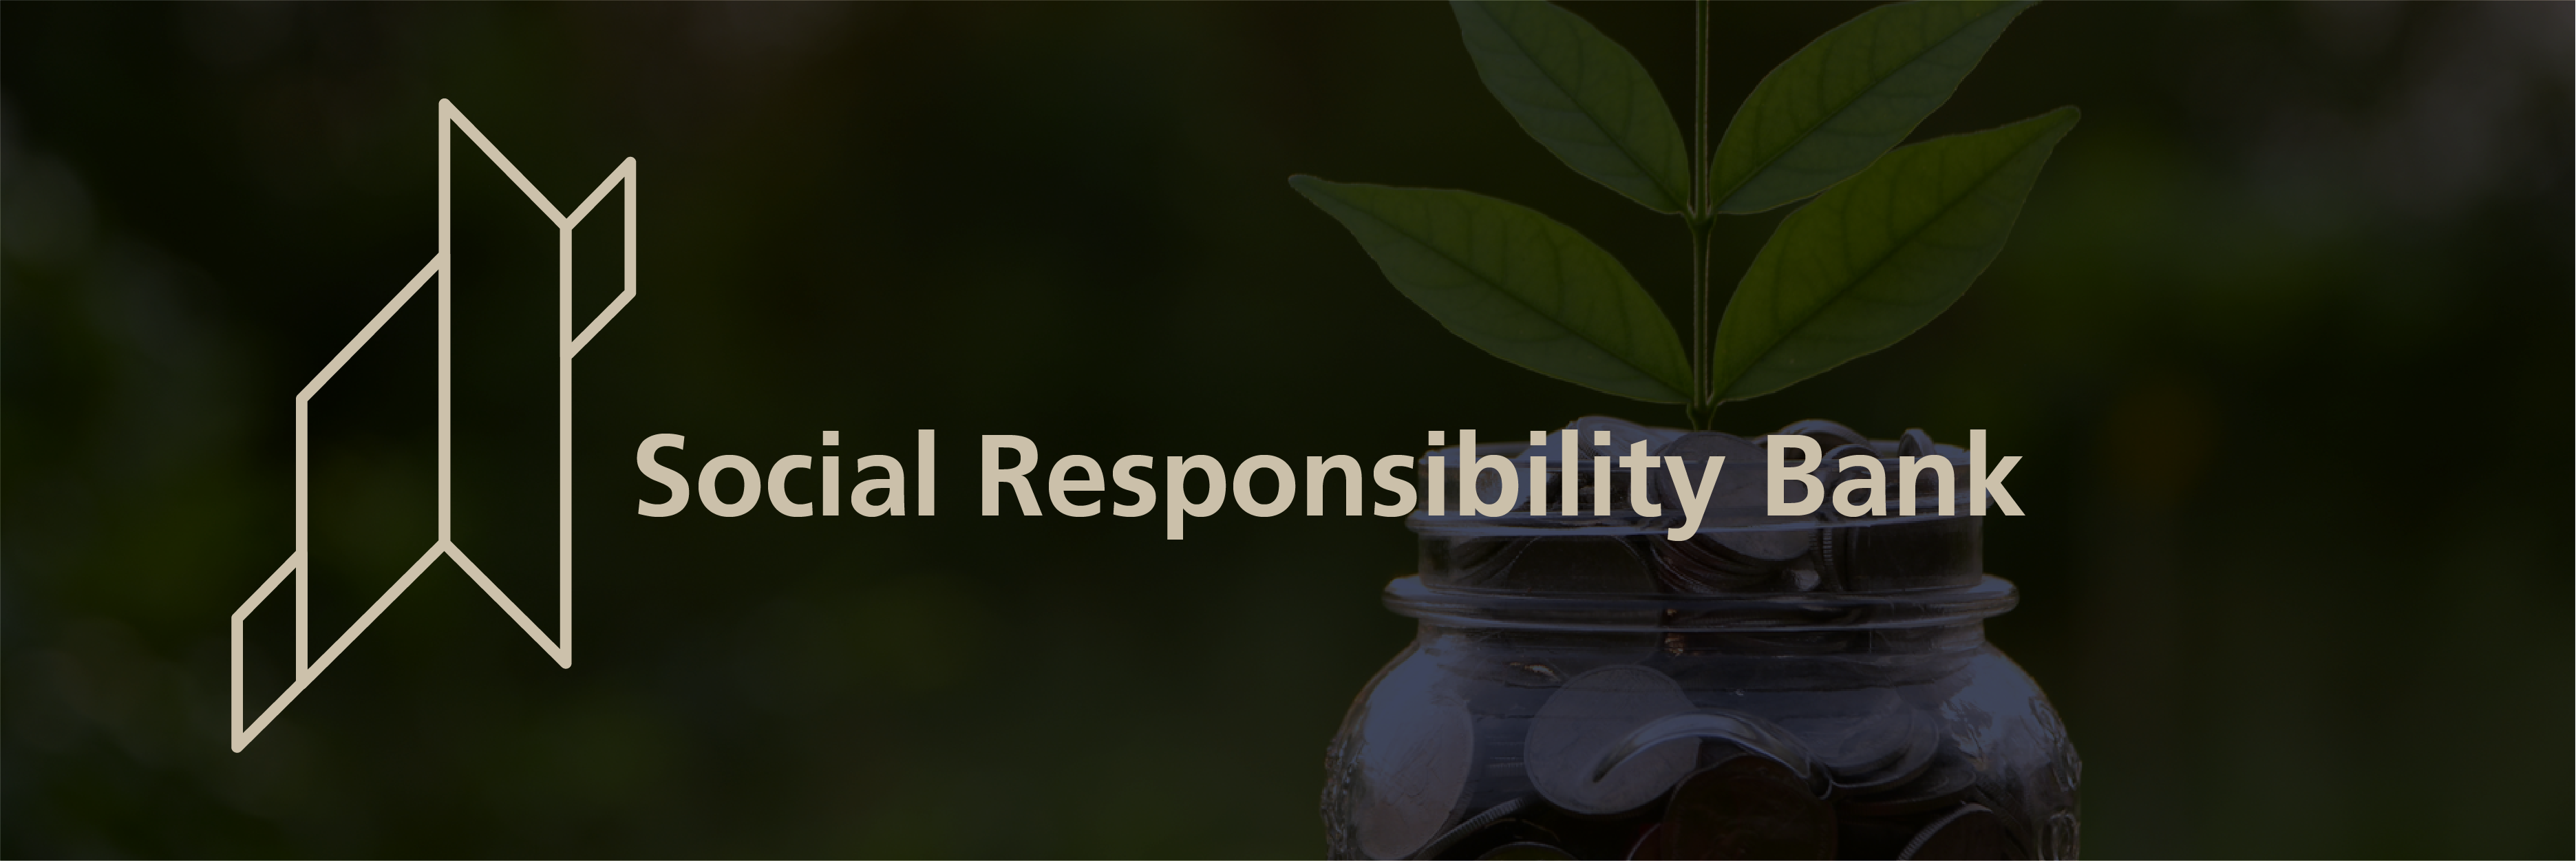 Social Responsibility Bank